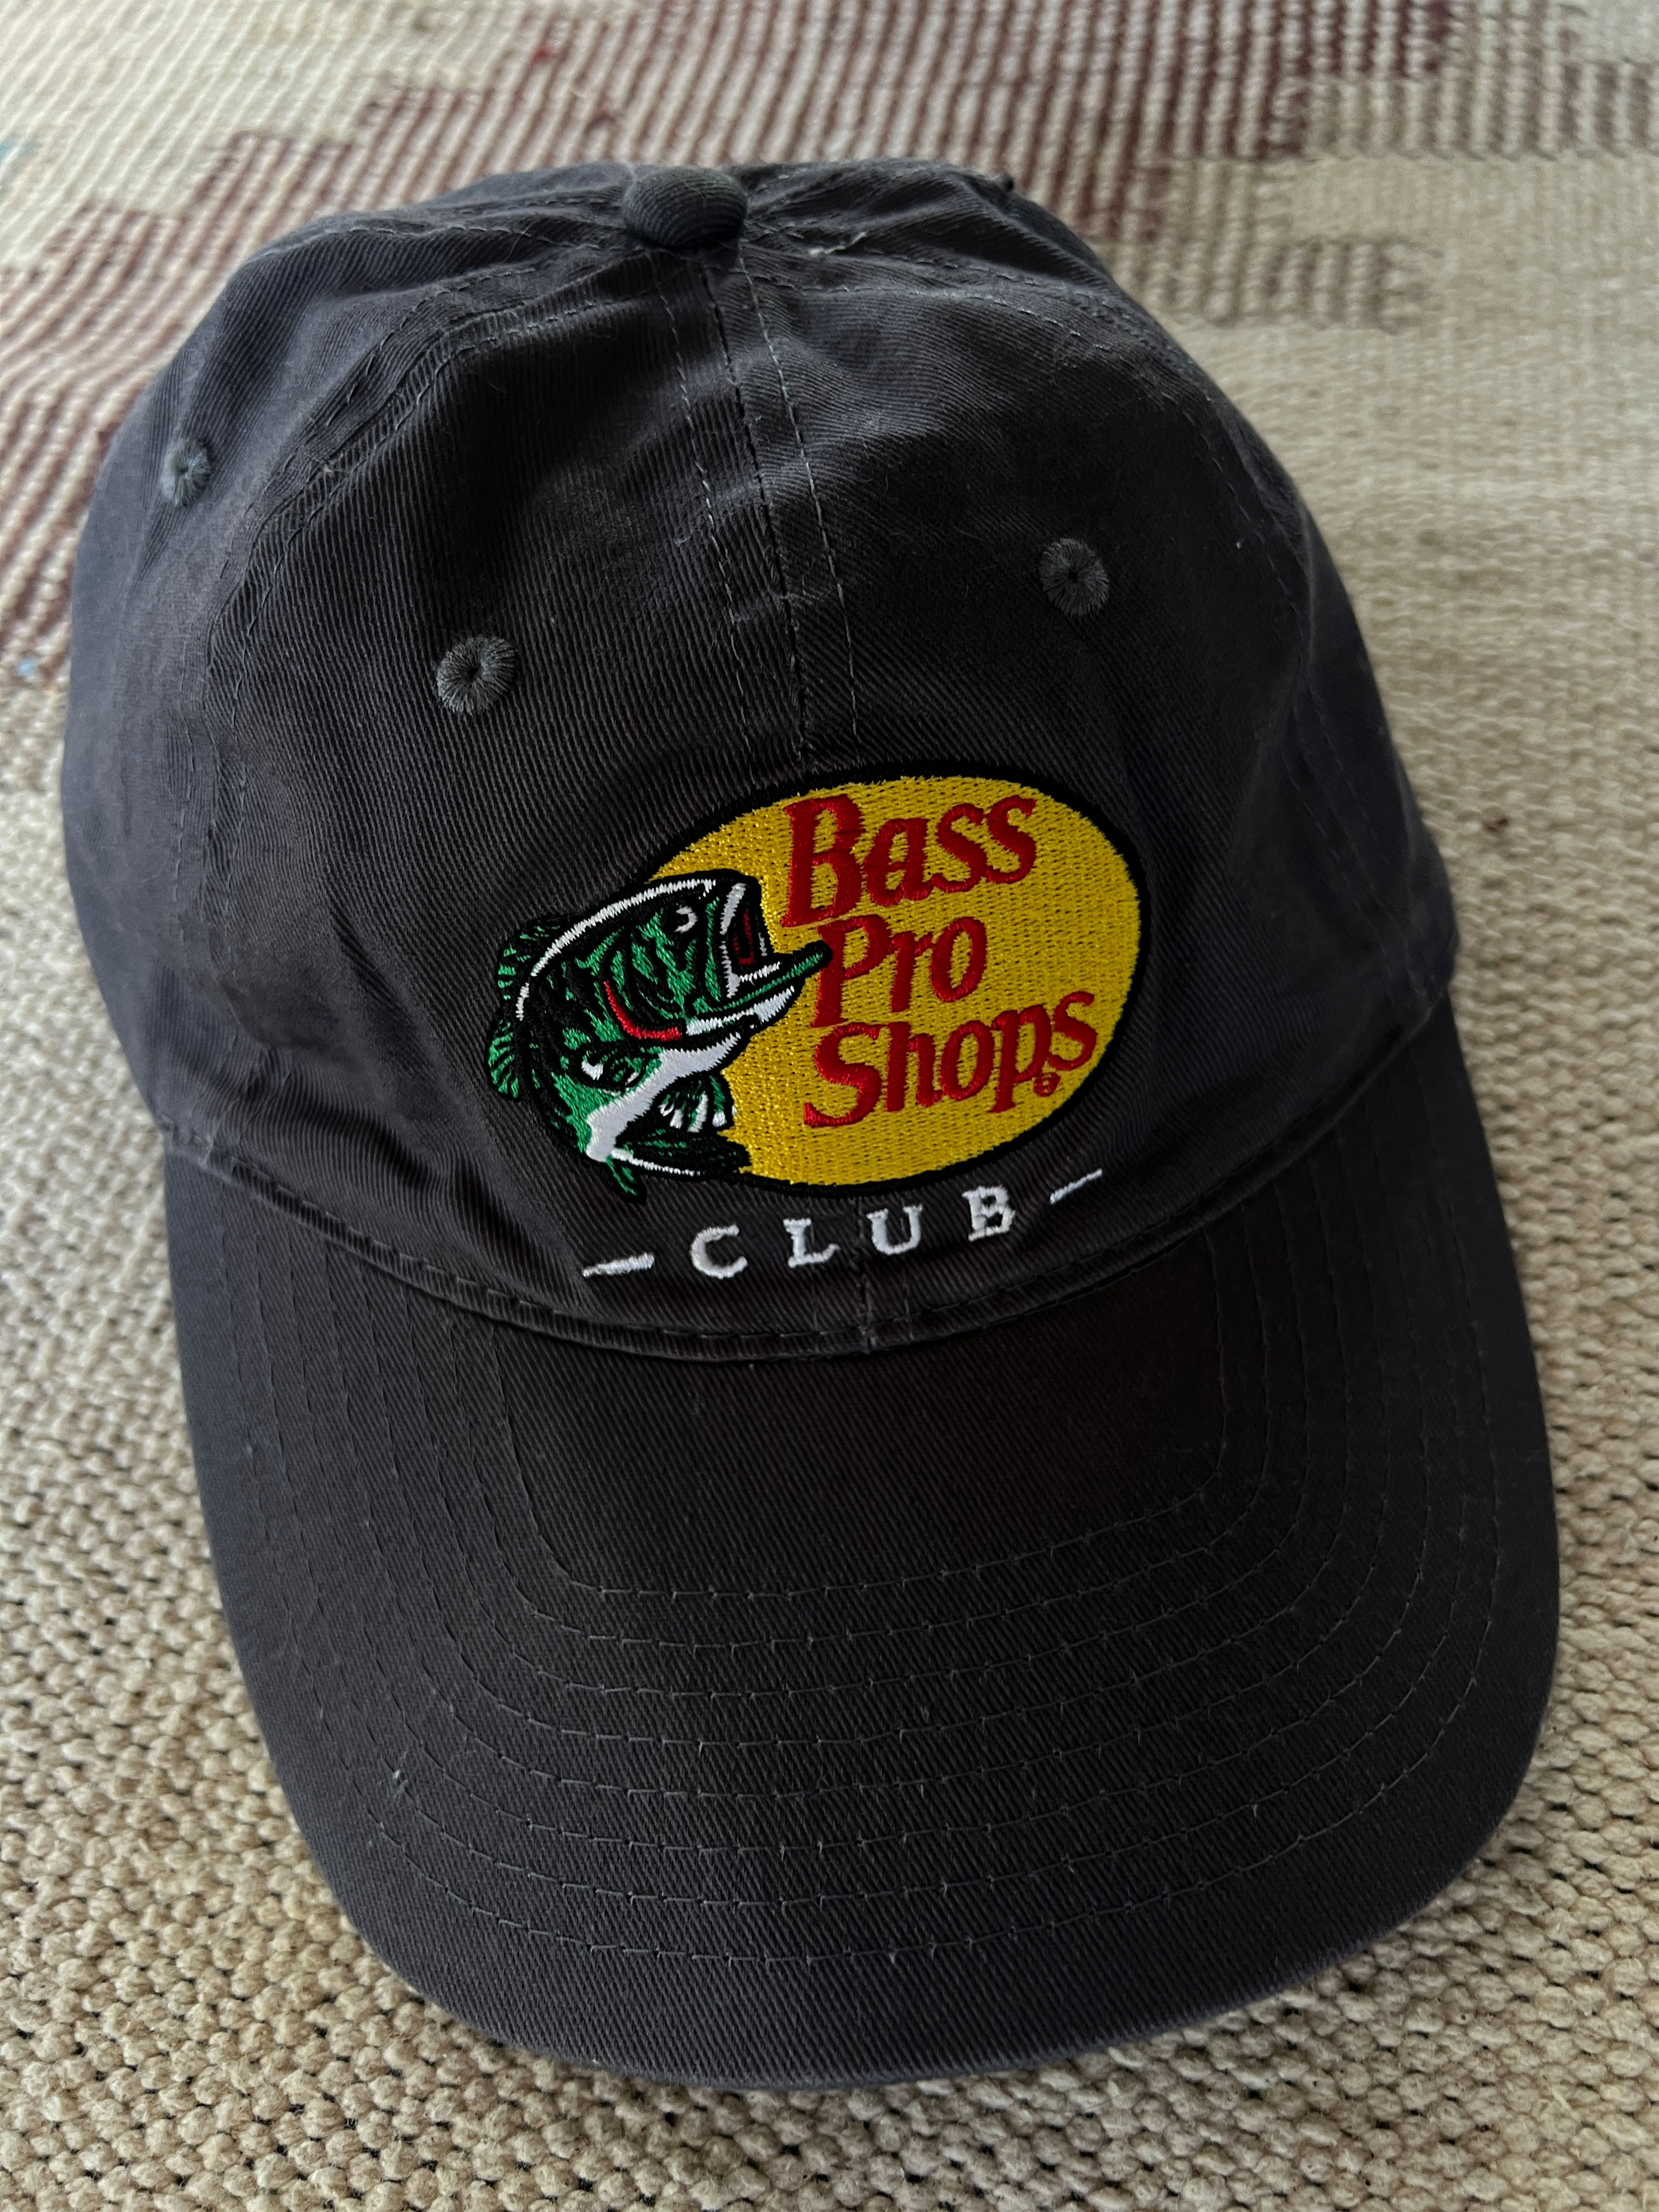 vintage BASS PRO SHOP ball cap